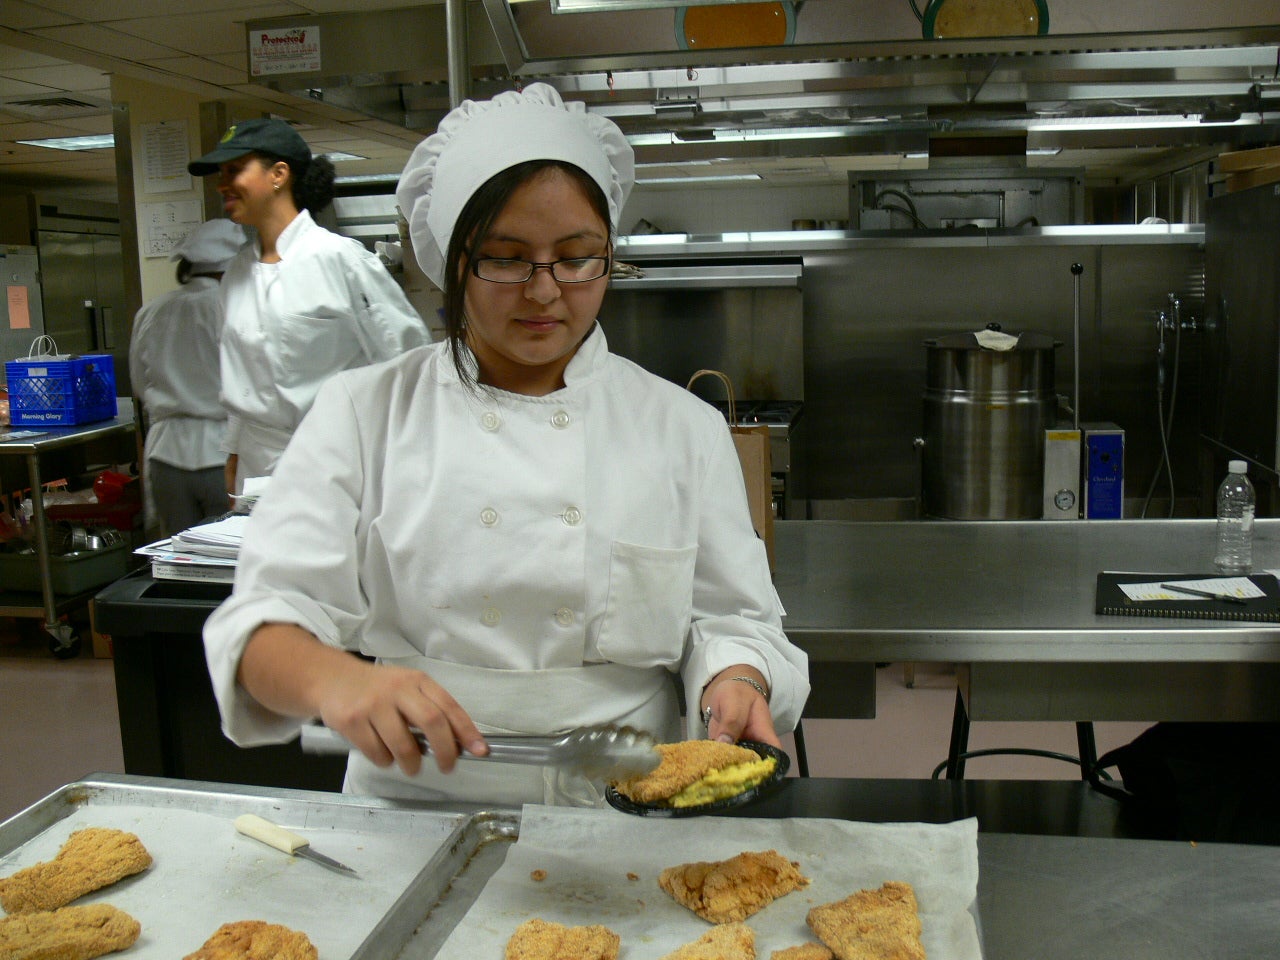 A high school student in chef's attire prepares meals.